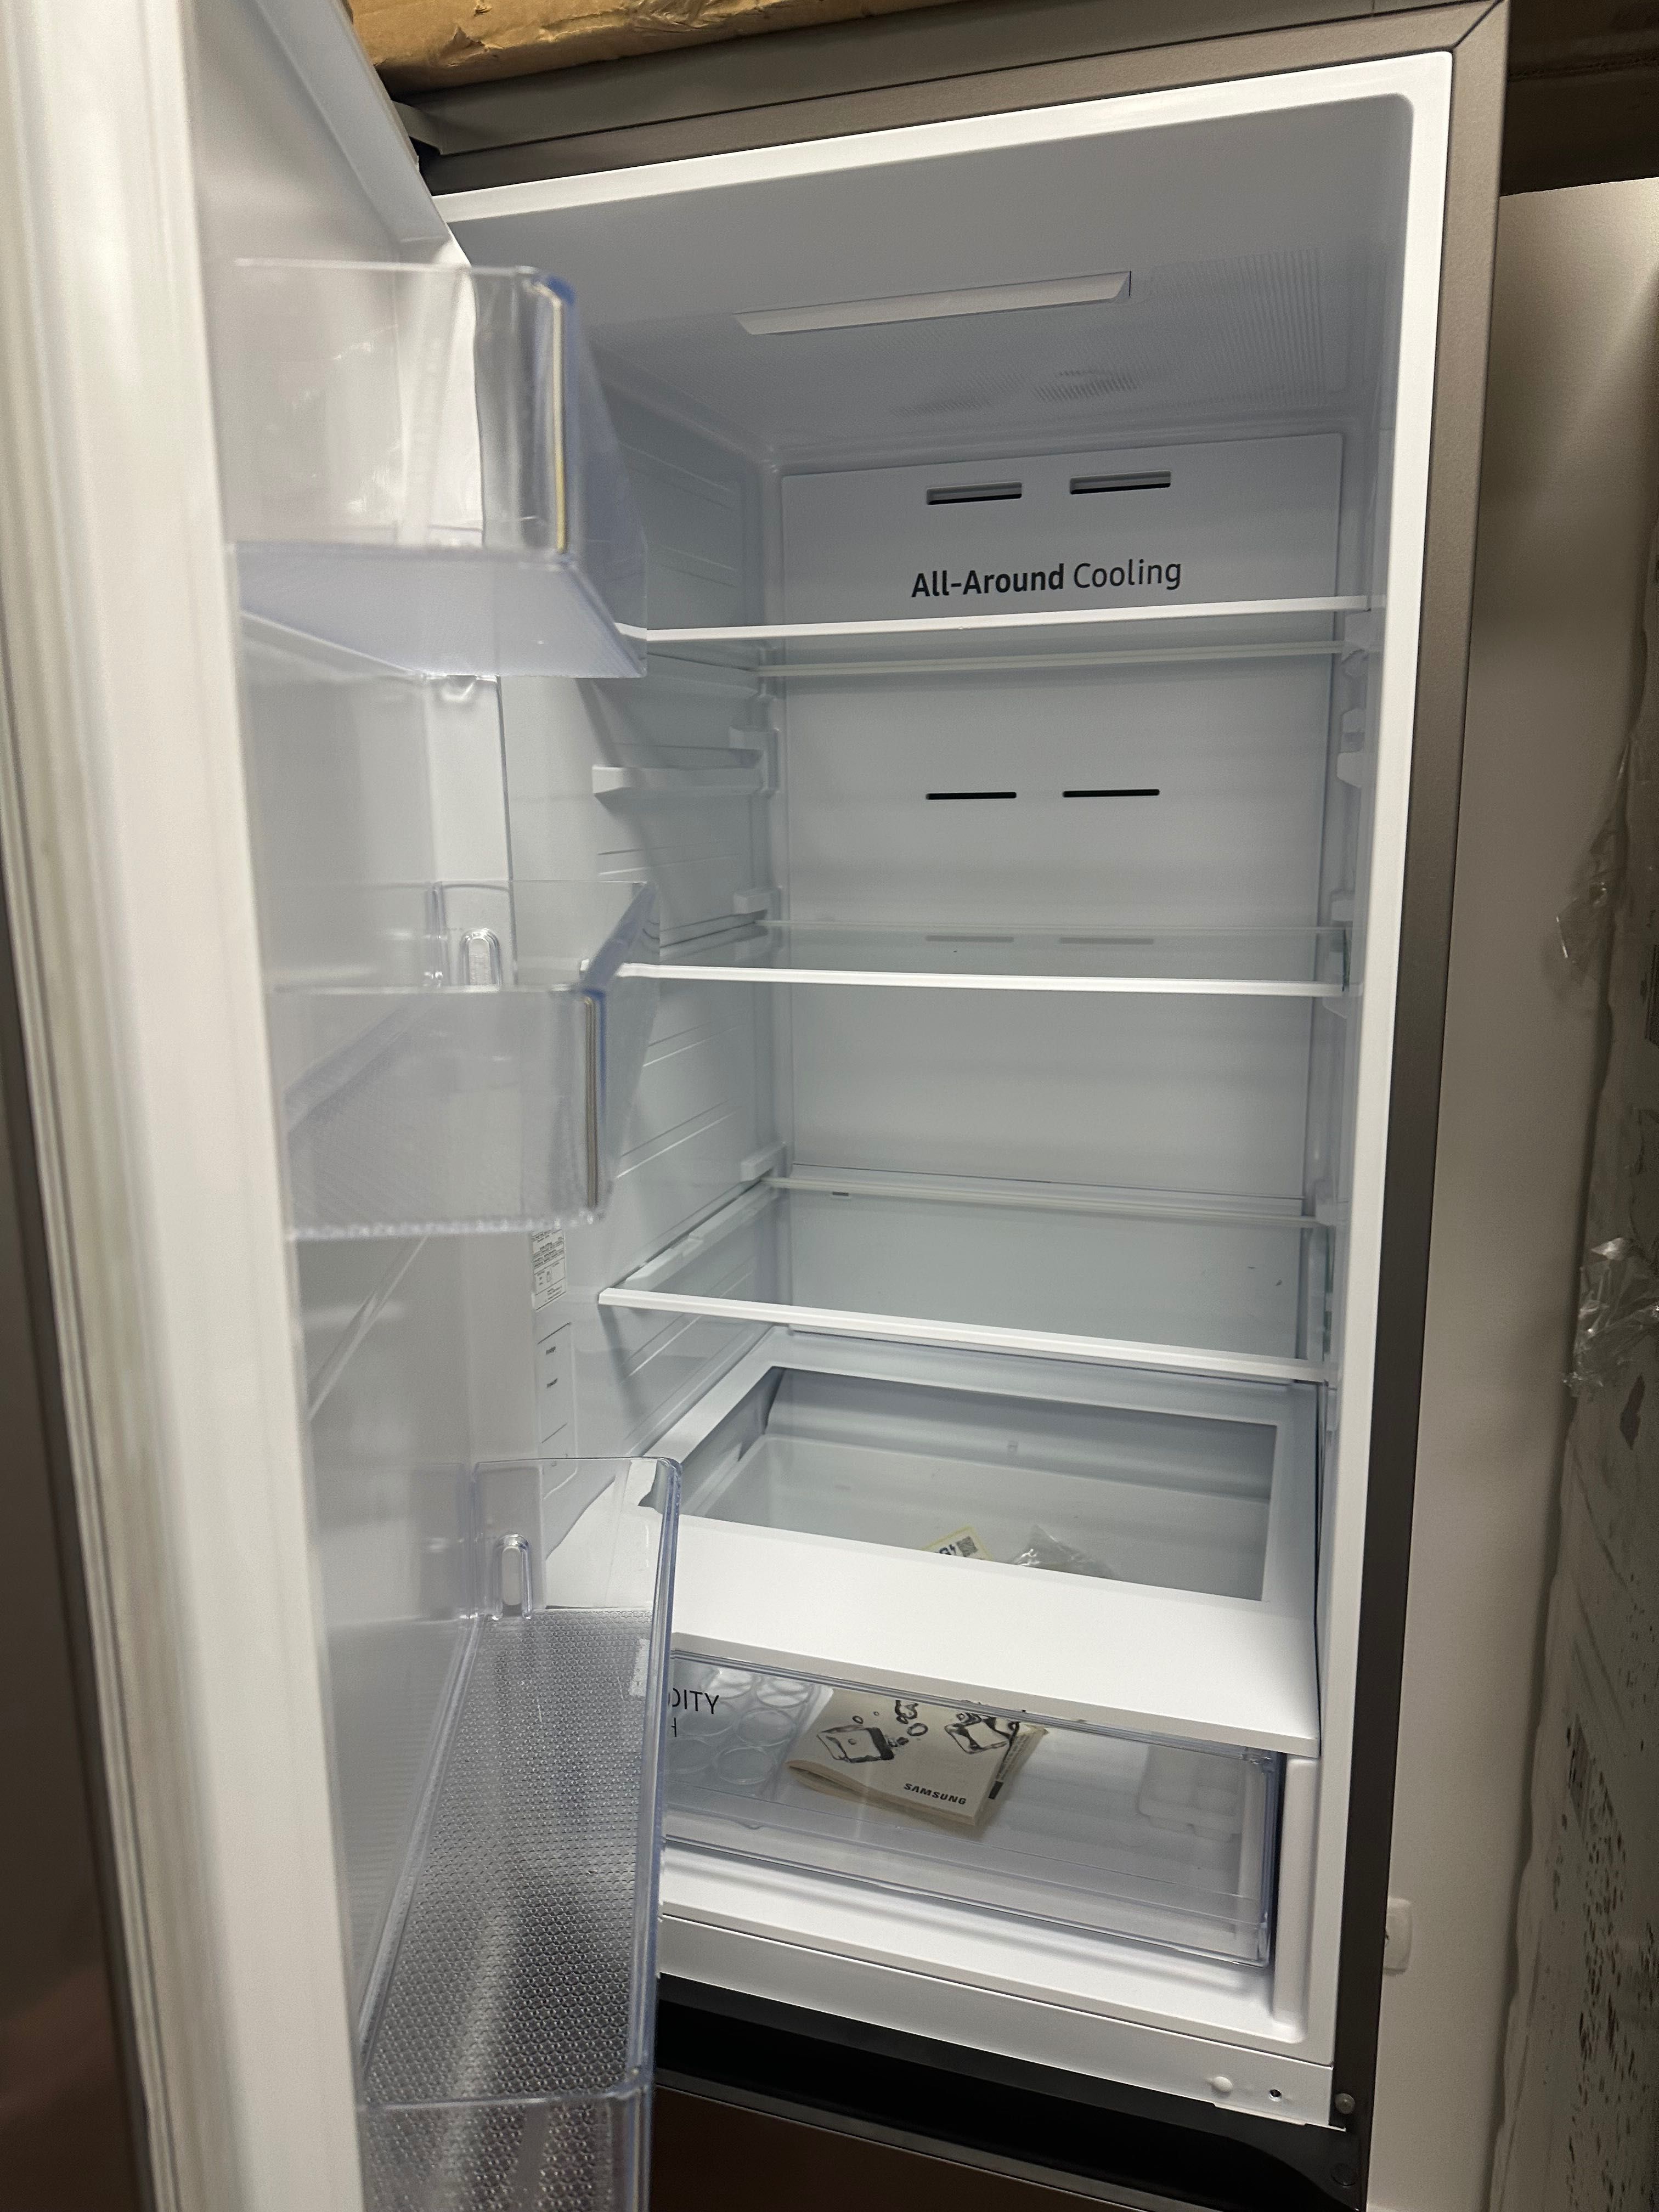 Хладилник с фризер SAMSUNG RL36T600CSA